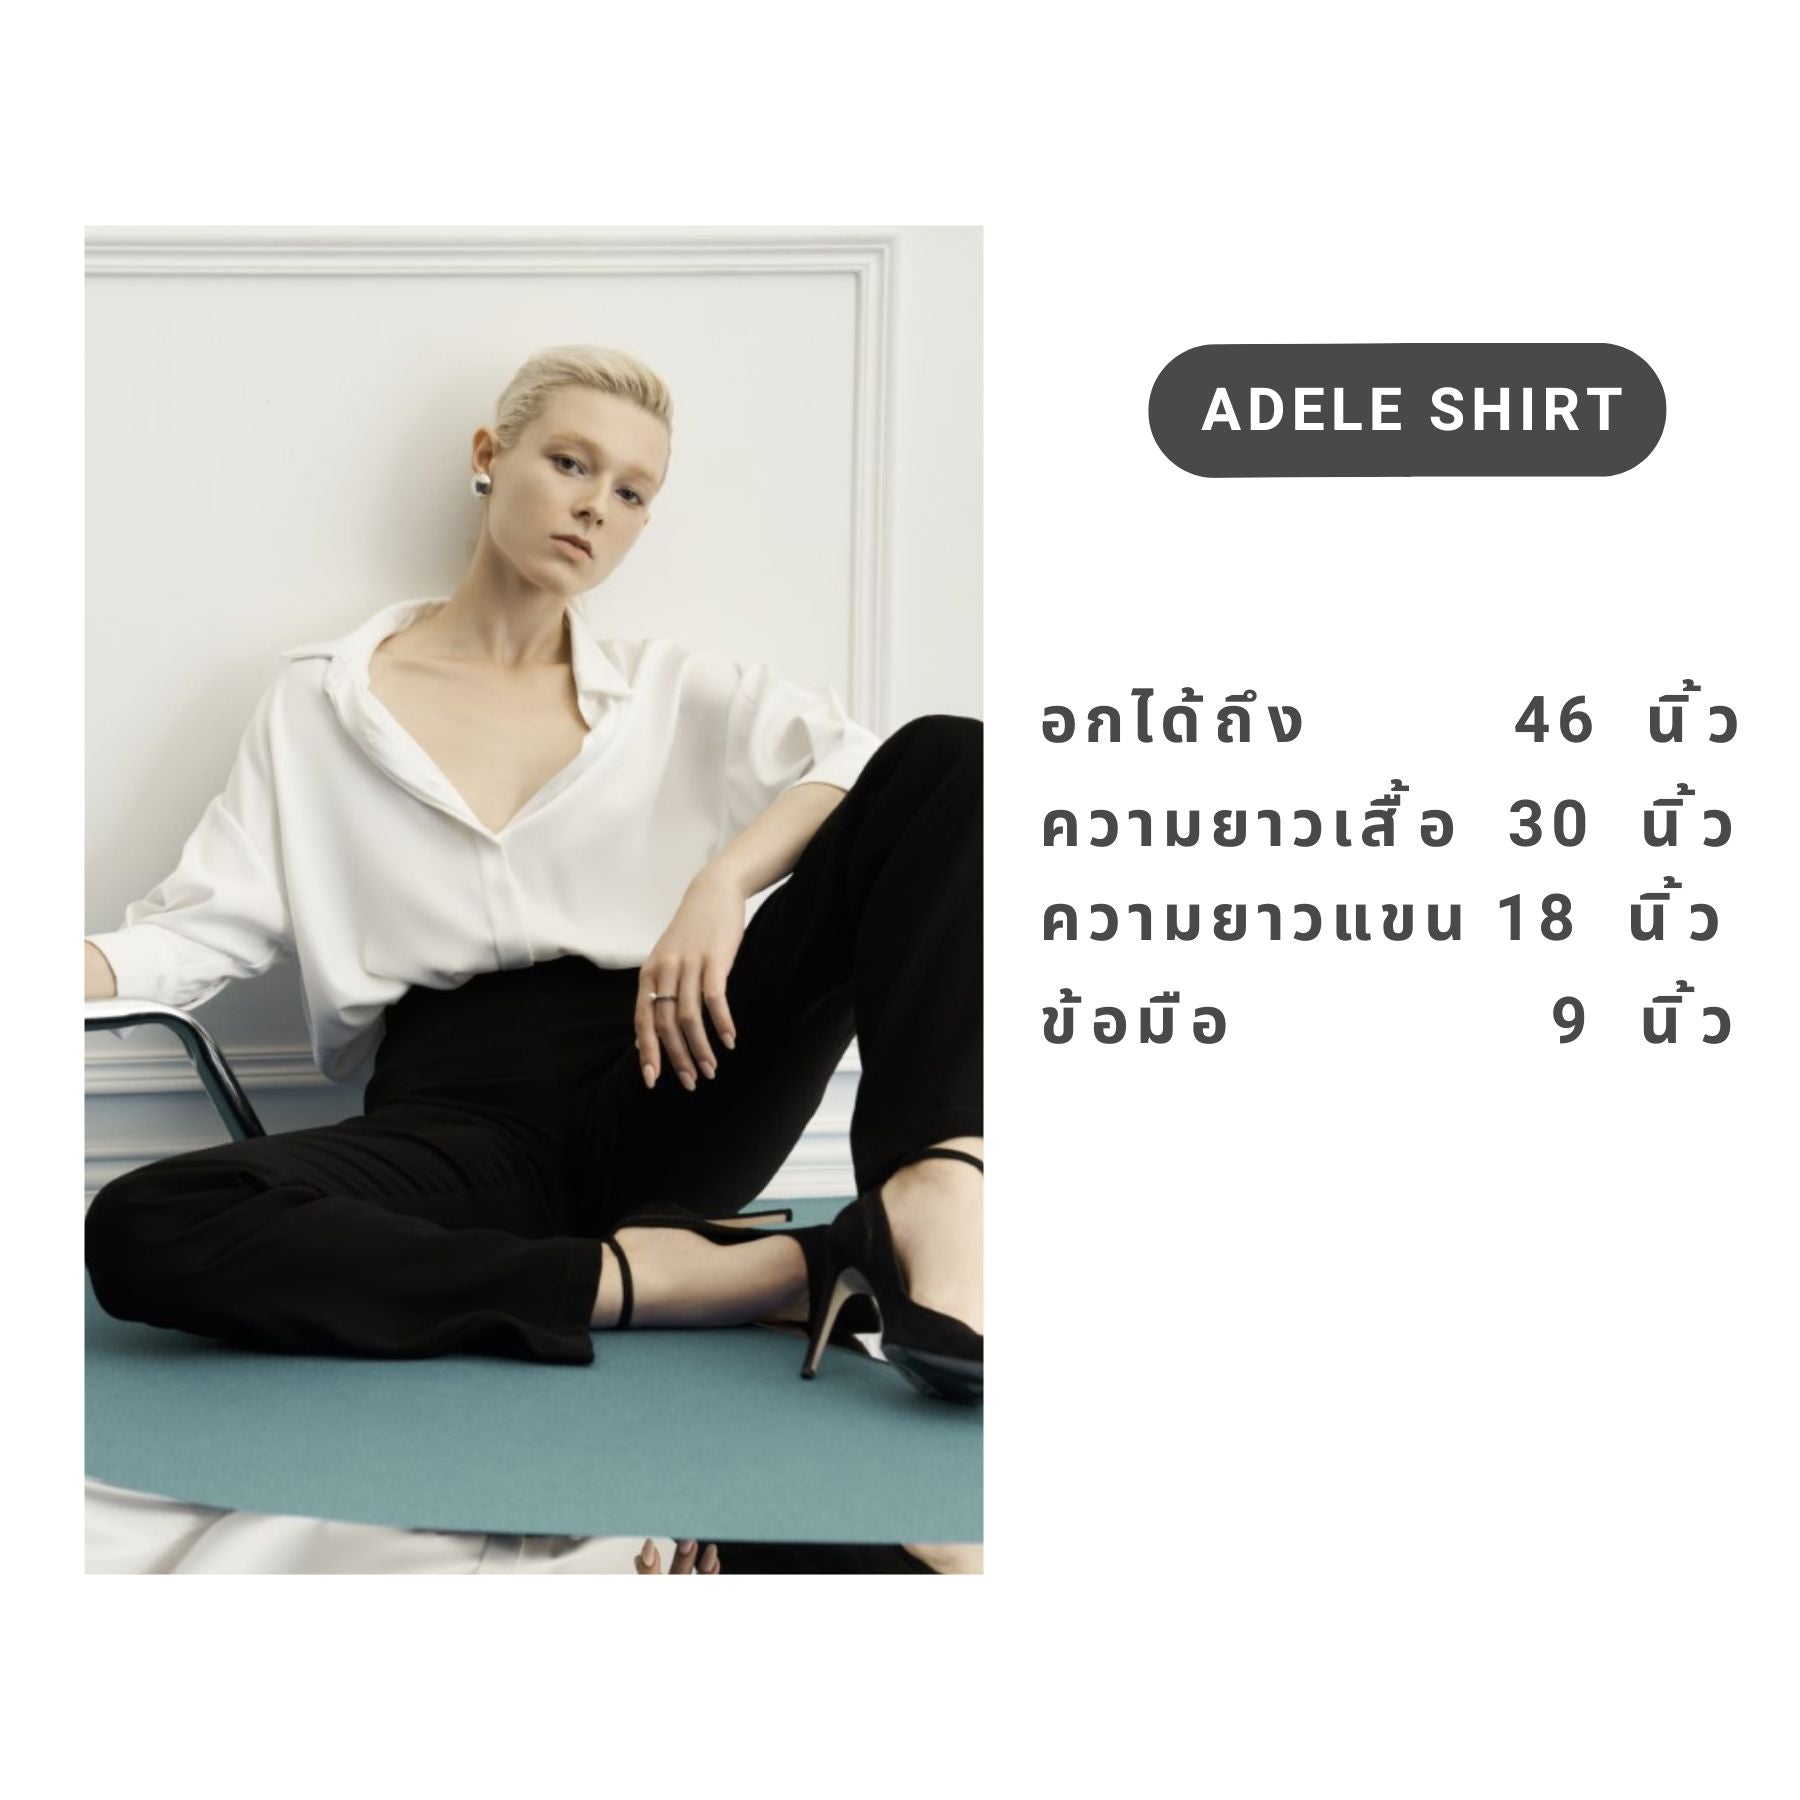 NICHp : Adele shirt